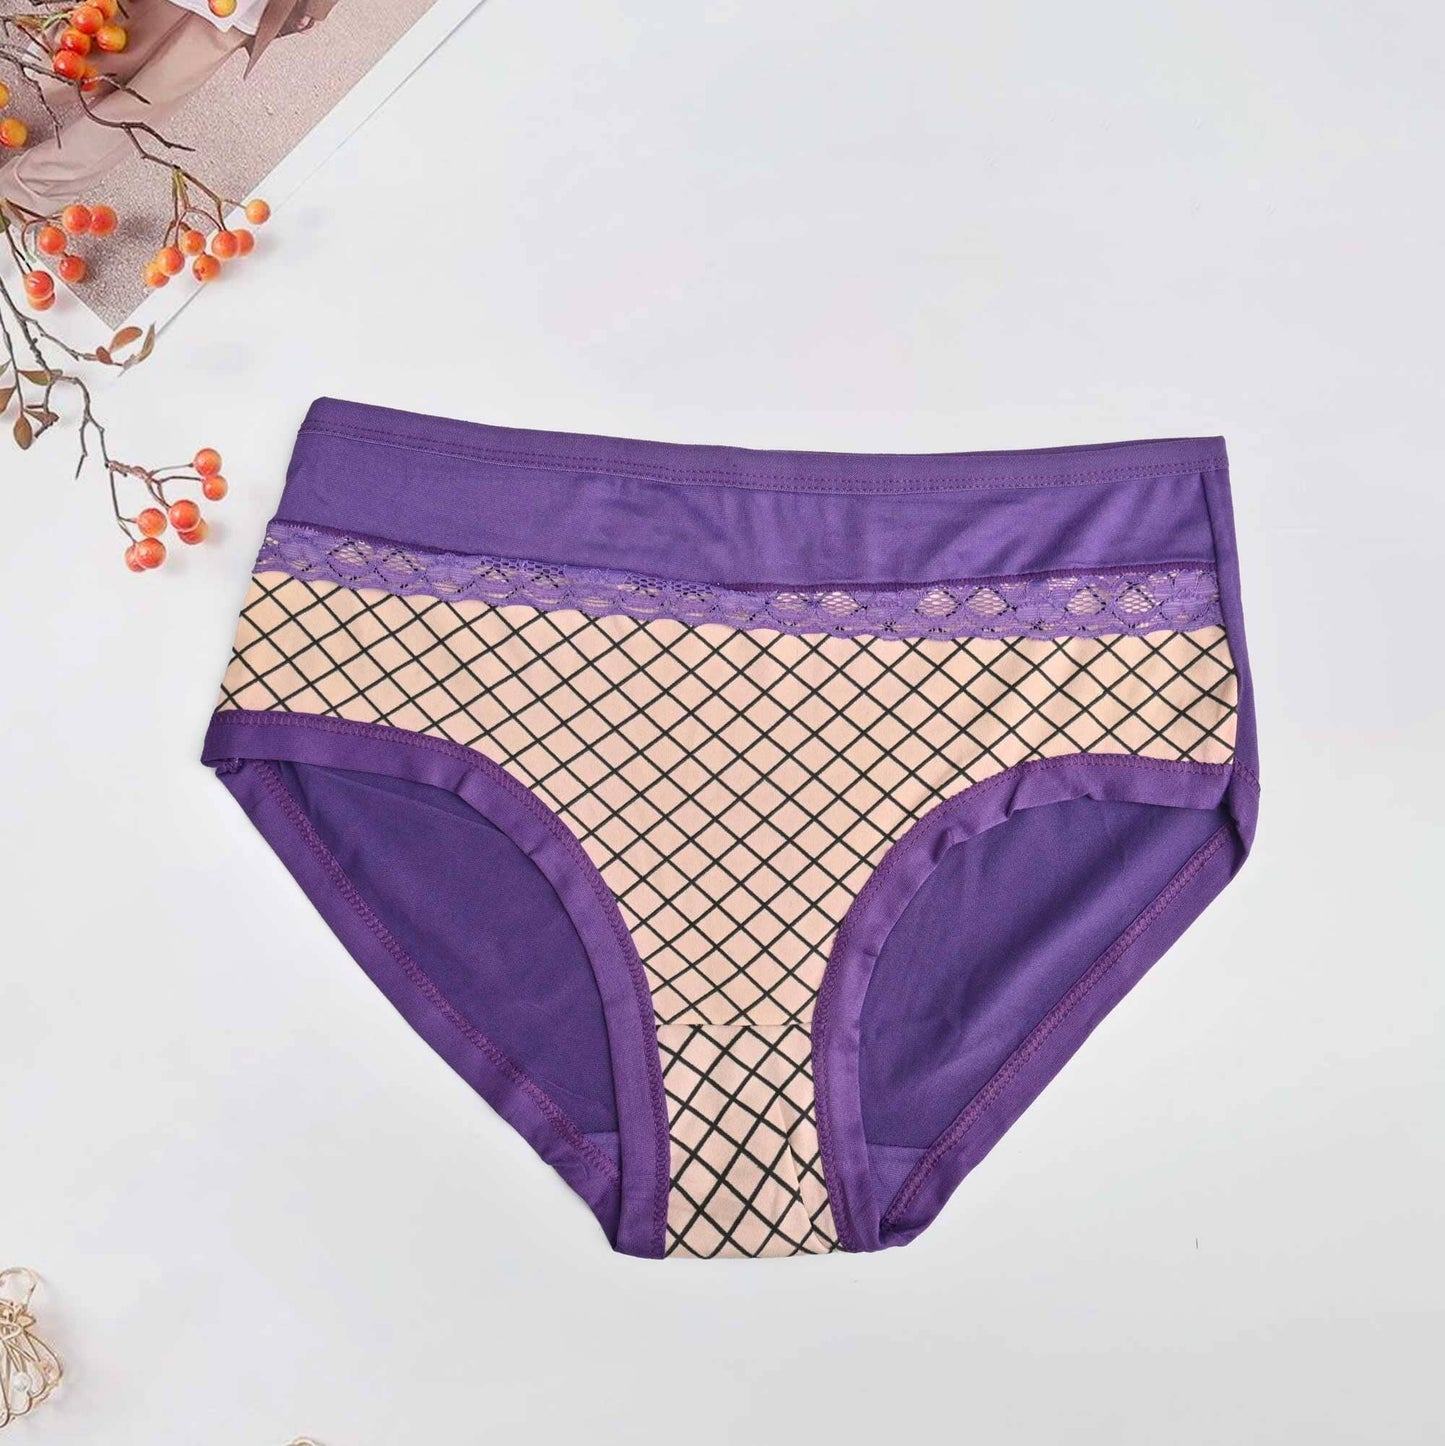 Shuifanxin Women's Lace Design Underwear Panties Women's Panties RAM Purple 30-34 inches 